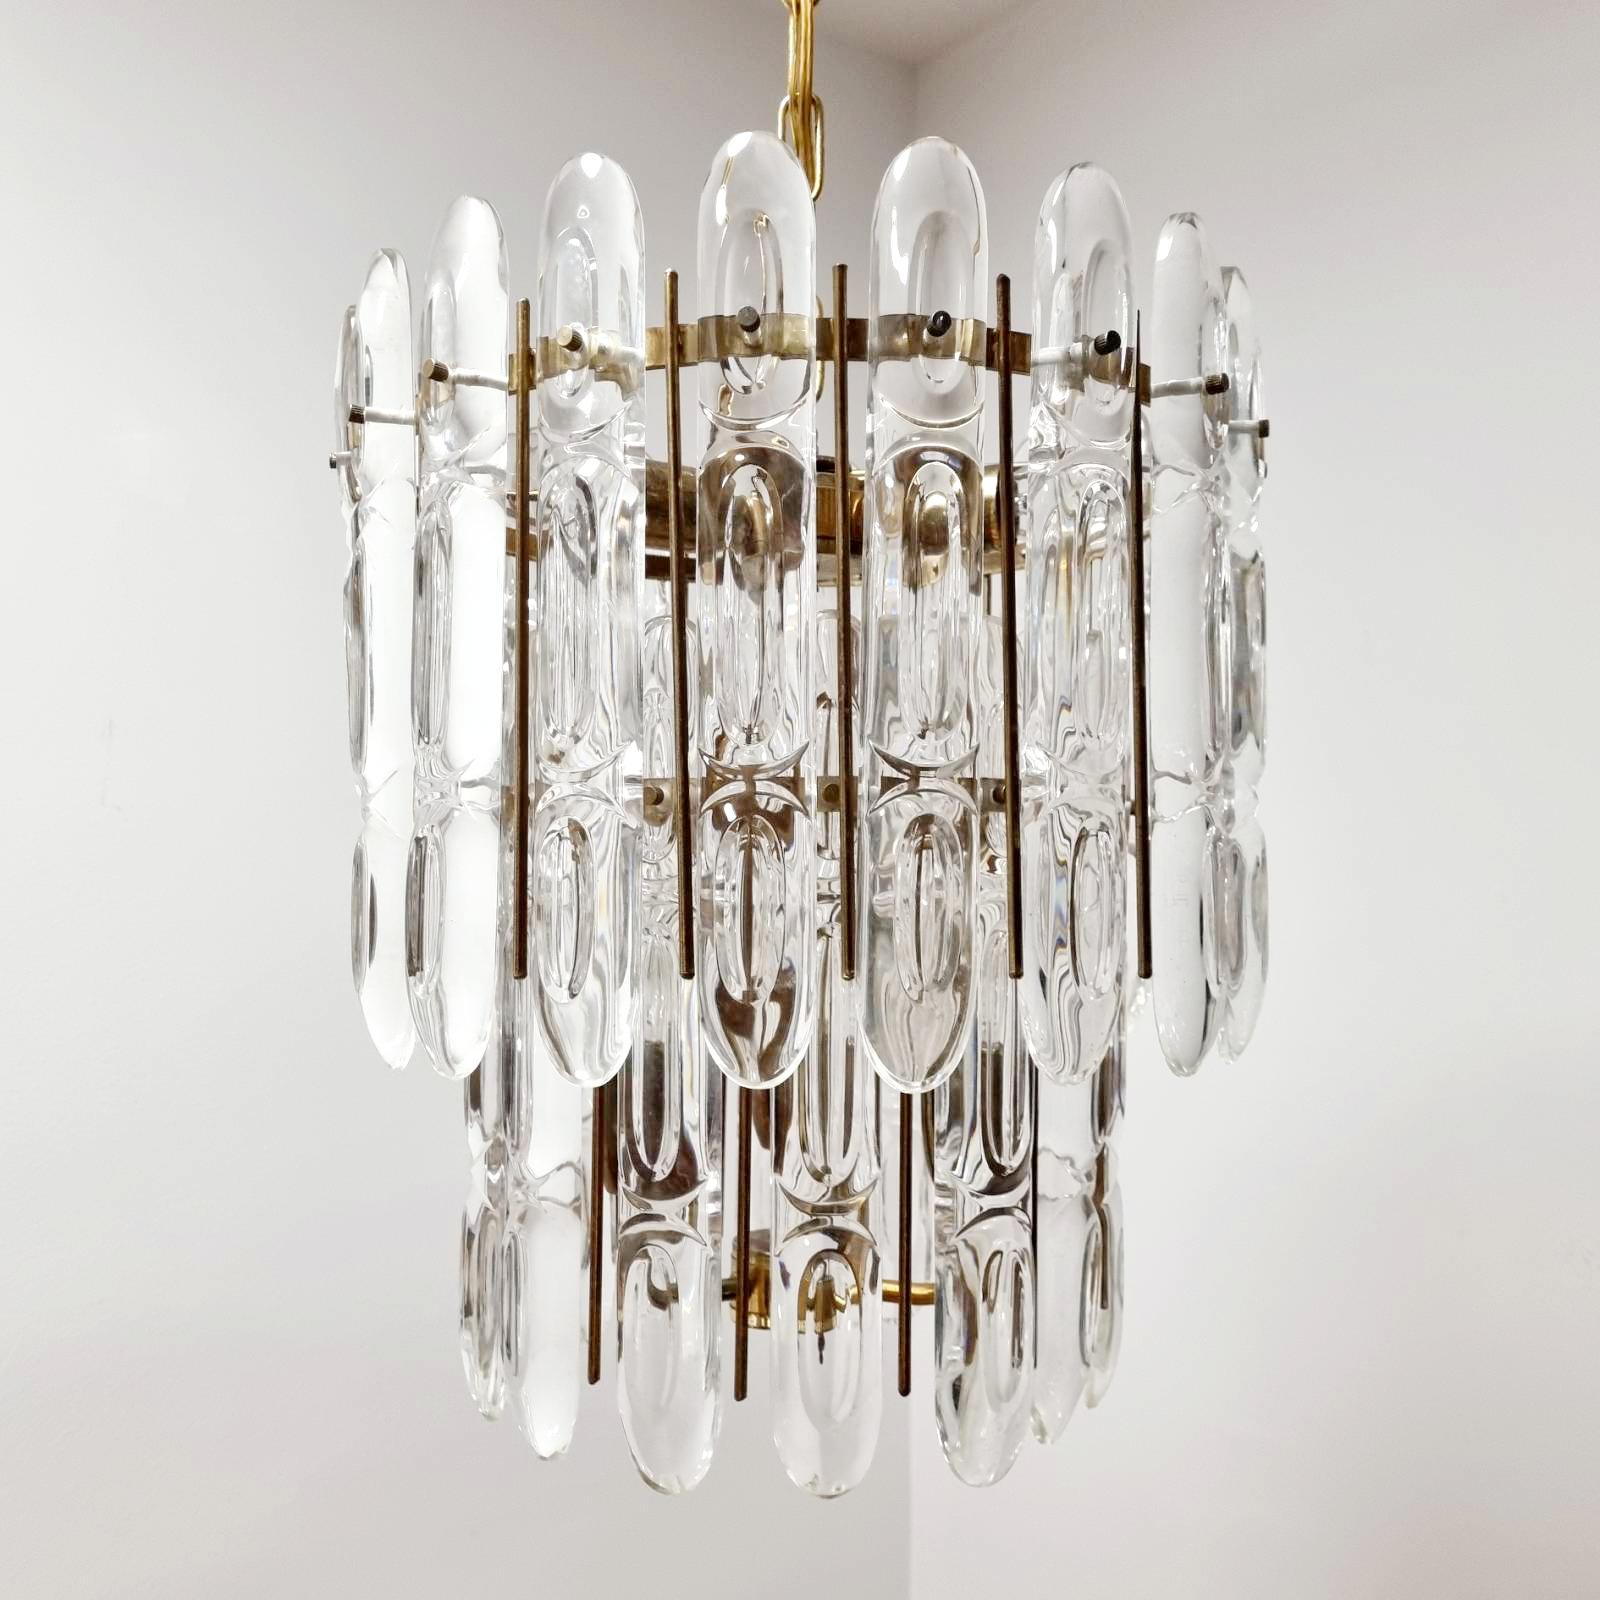 Beautiful chandelier designed by Gaetano Sciolari in the late 60s for Sciolari.

